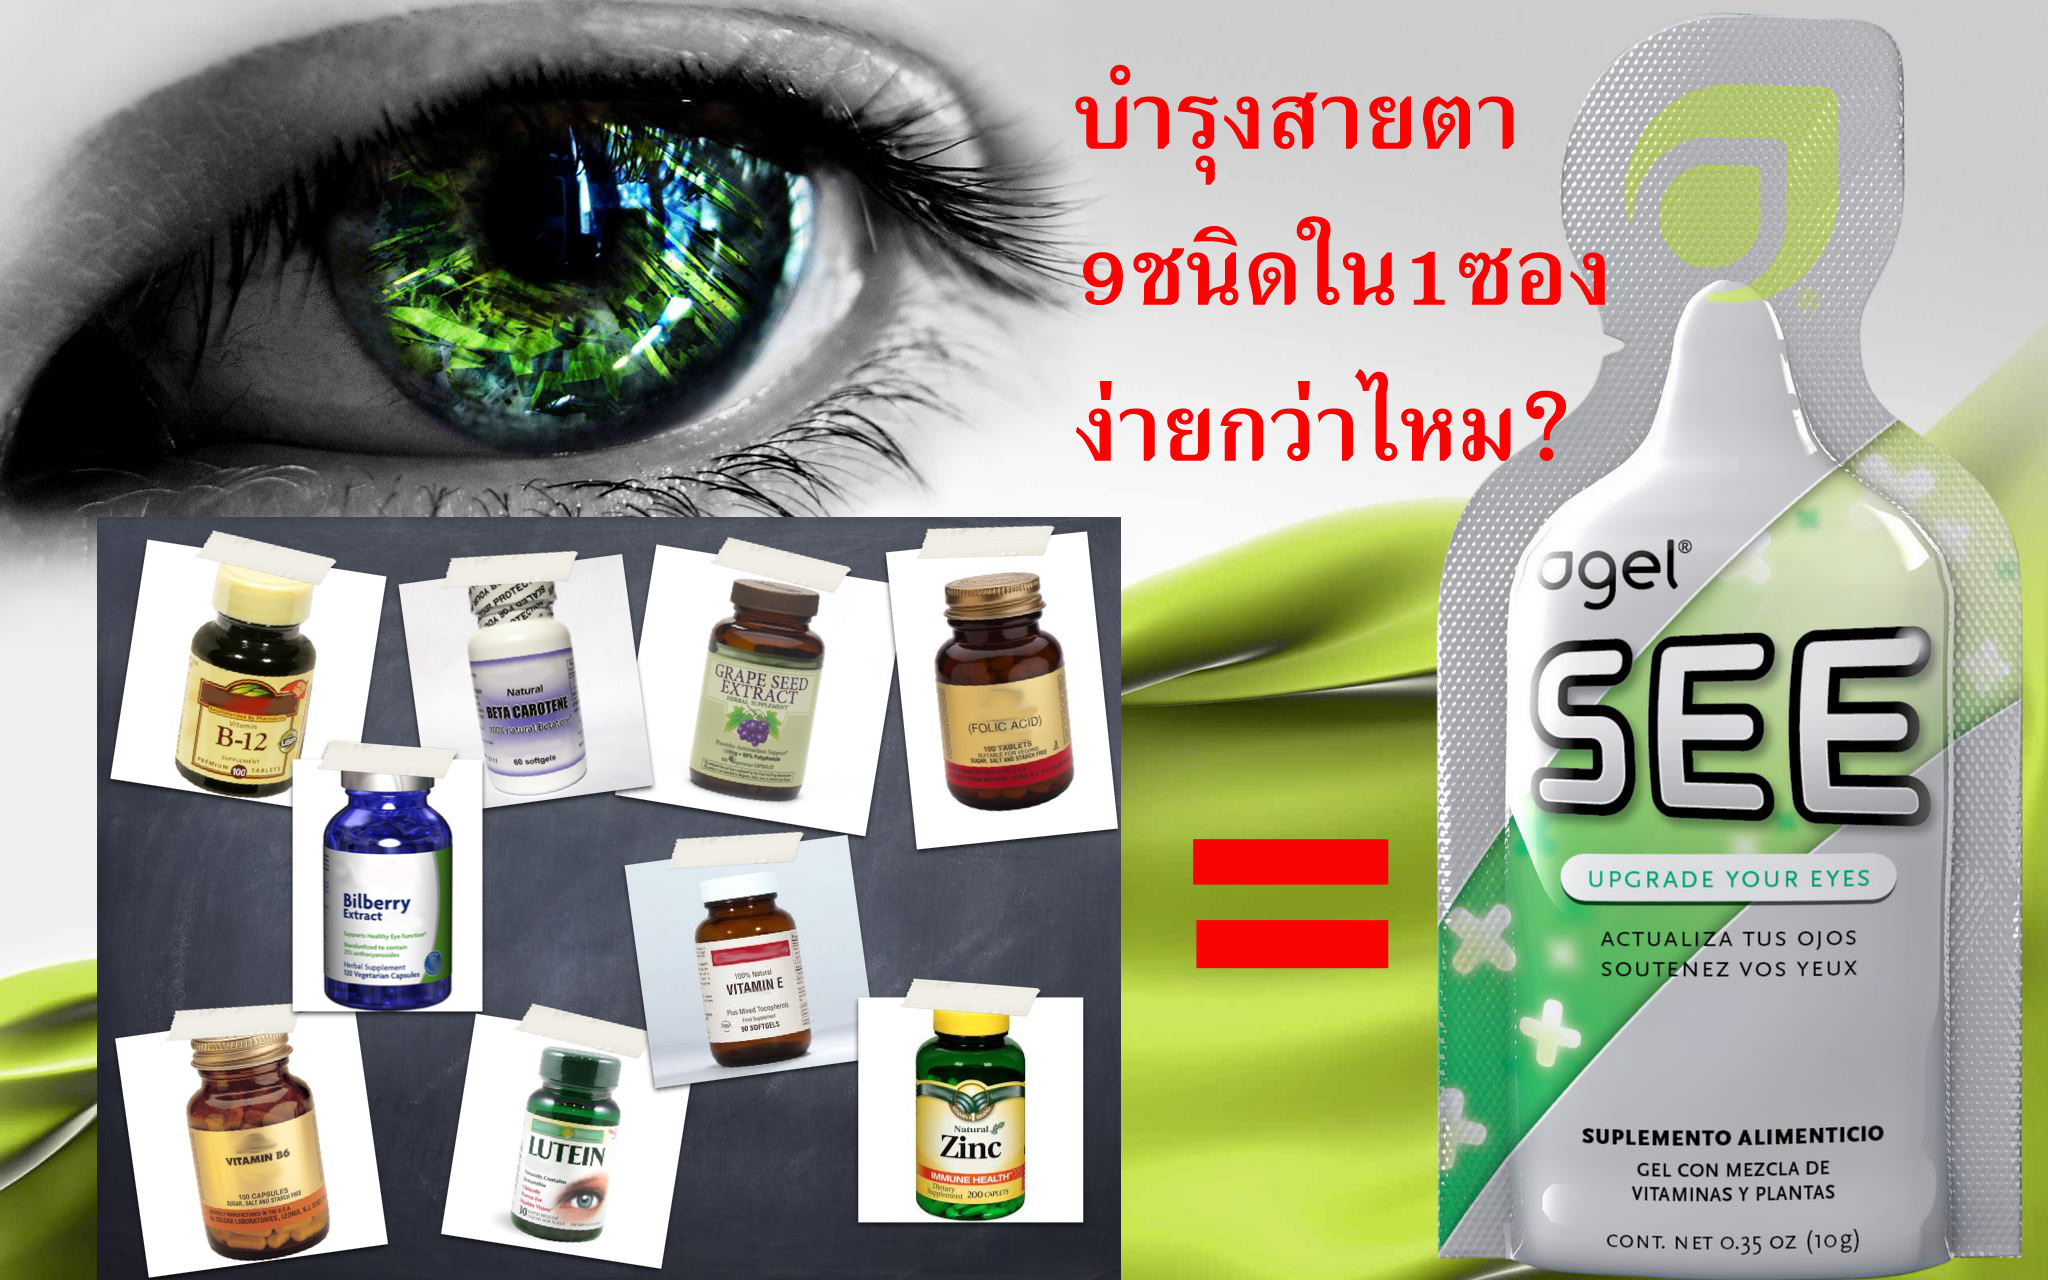 SEE-agel-active-ingredientขสายตา-agel-see-บำรุง-ตาเสื่อม-วุ้นในตาเสื่อม-ลูทีน-อาหารเสริม-เบต้าแคโรทีน-ดีคอนแท็ค-กินง่าย-อ่านหนังสือเยอะ